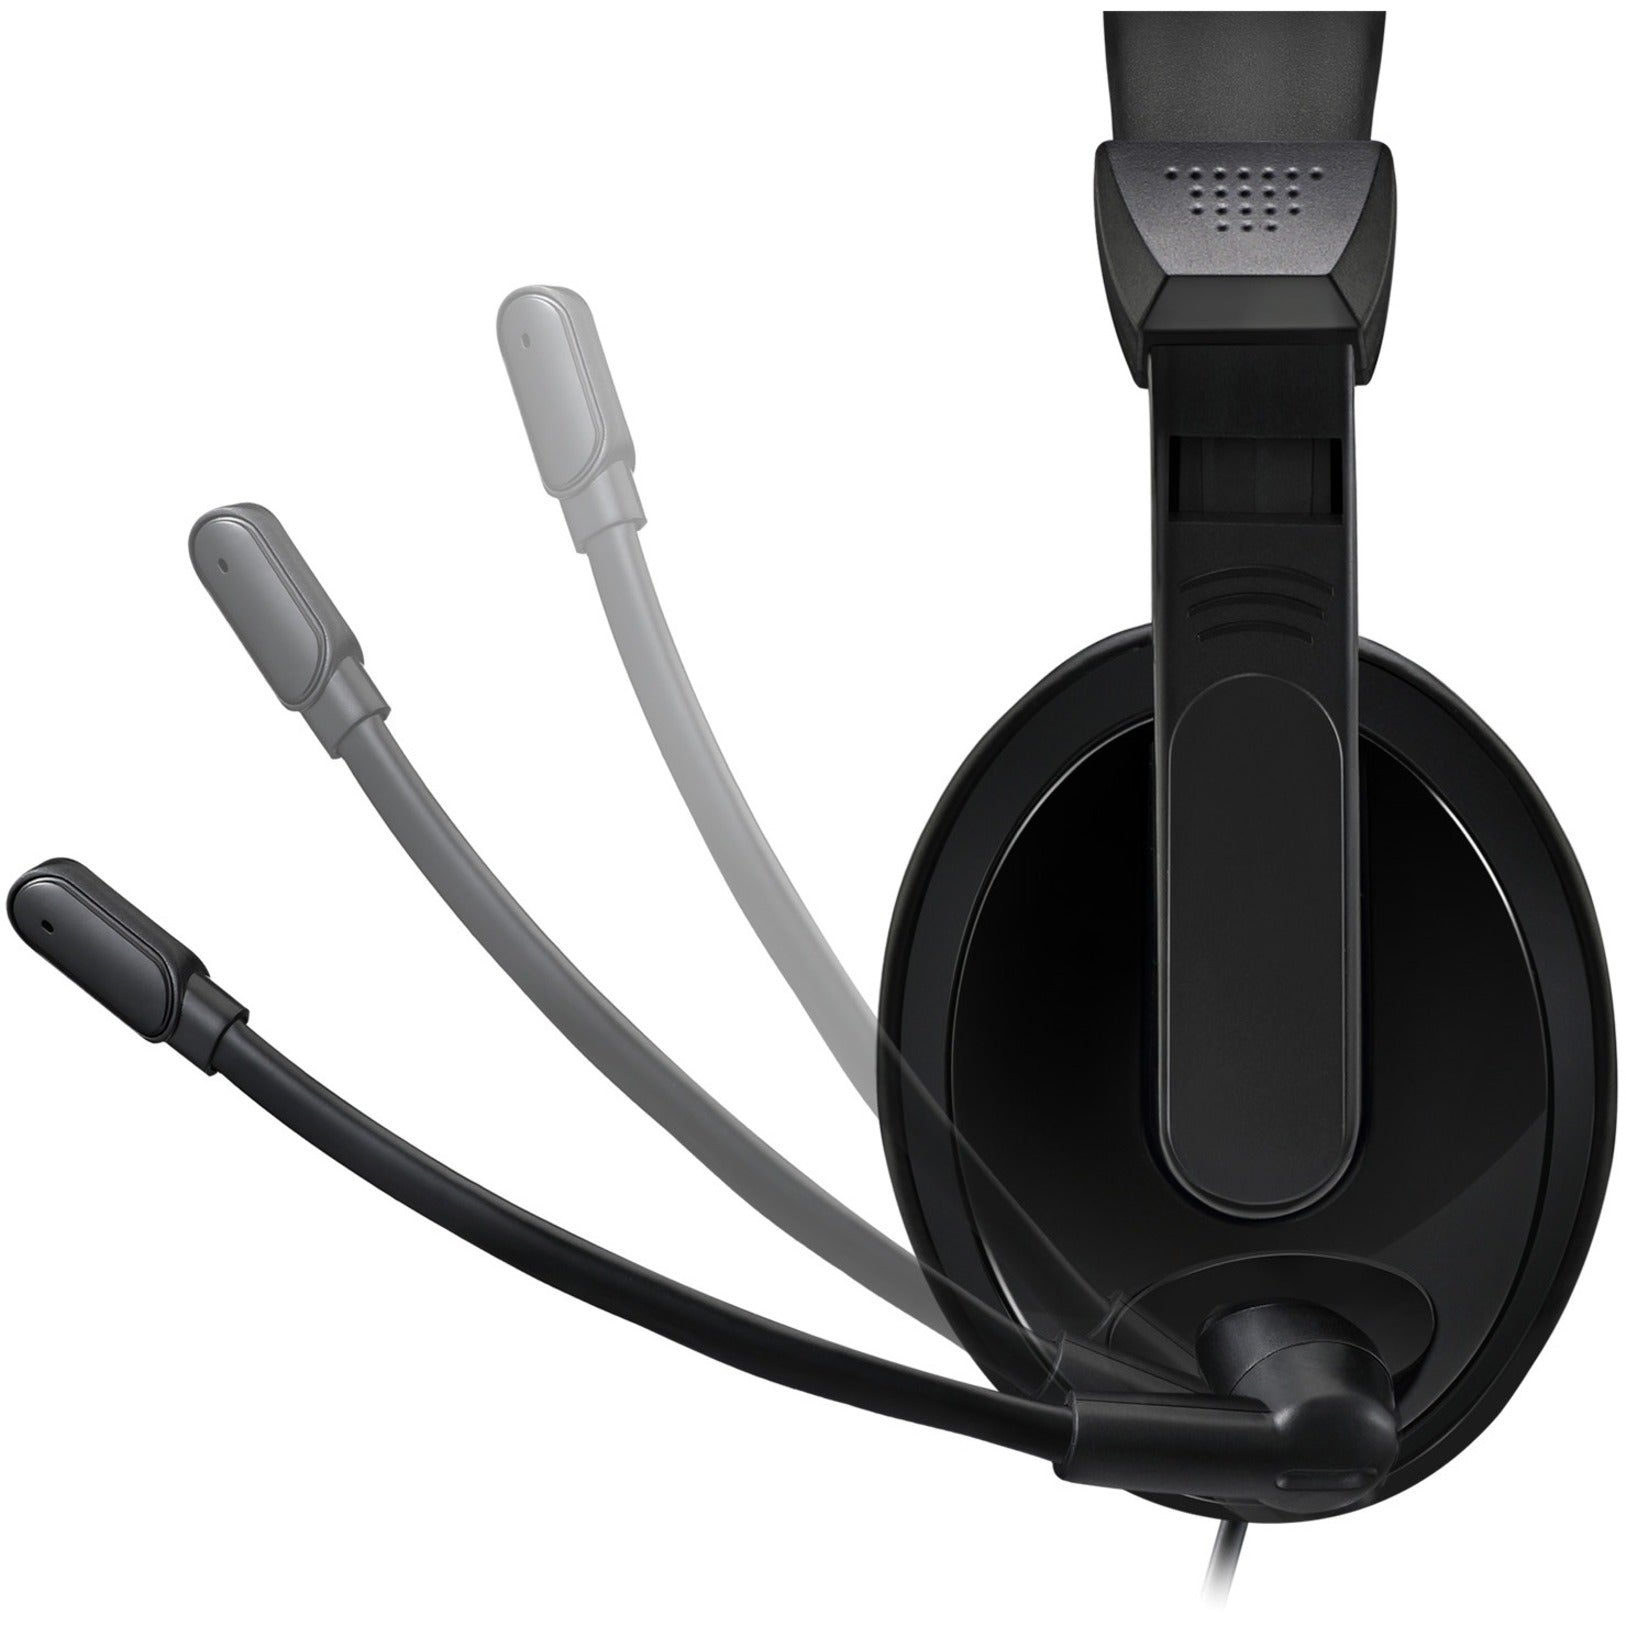 Adesso XTREAM H5U Xtream H5U Stereo USB Multimedia Headset with Microphone, Adjustable Boom Mic, Plug and Play